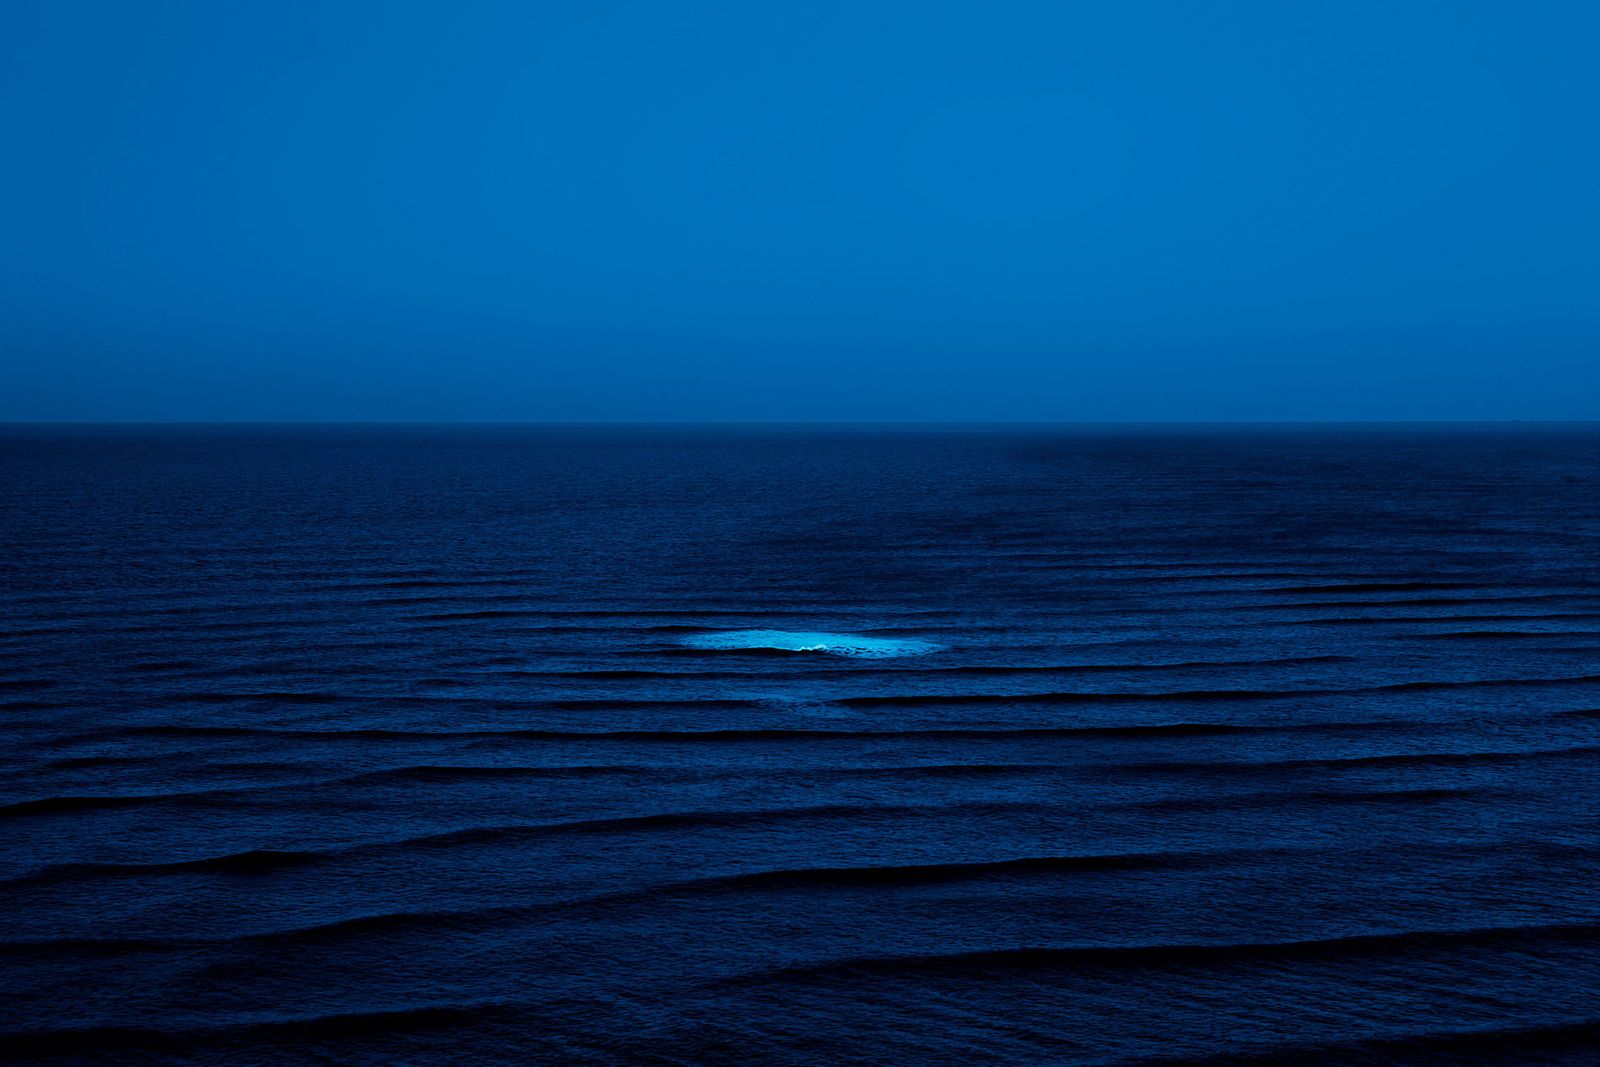 © Nicolás Janowski, from the series Adrift in Blue (2018 Pampa Energía FoLa Awards juror)